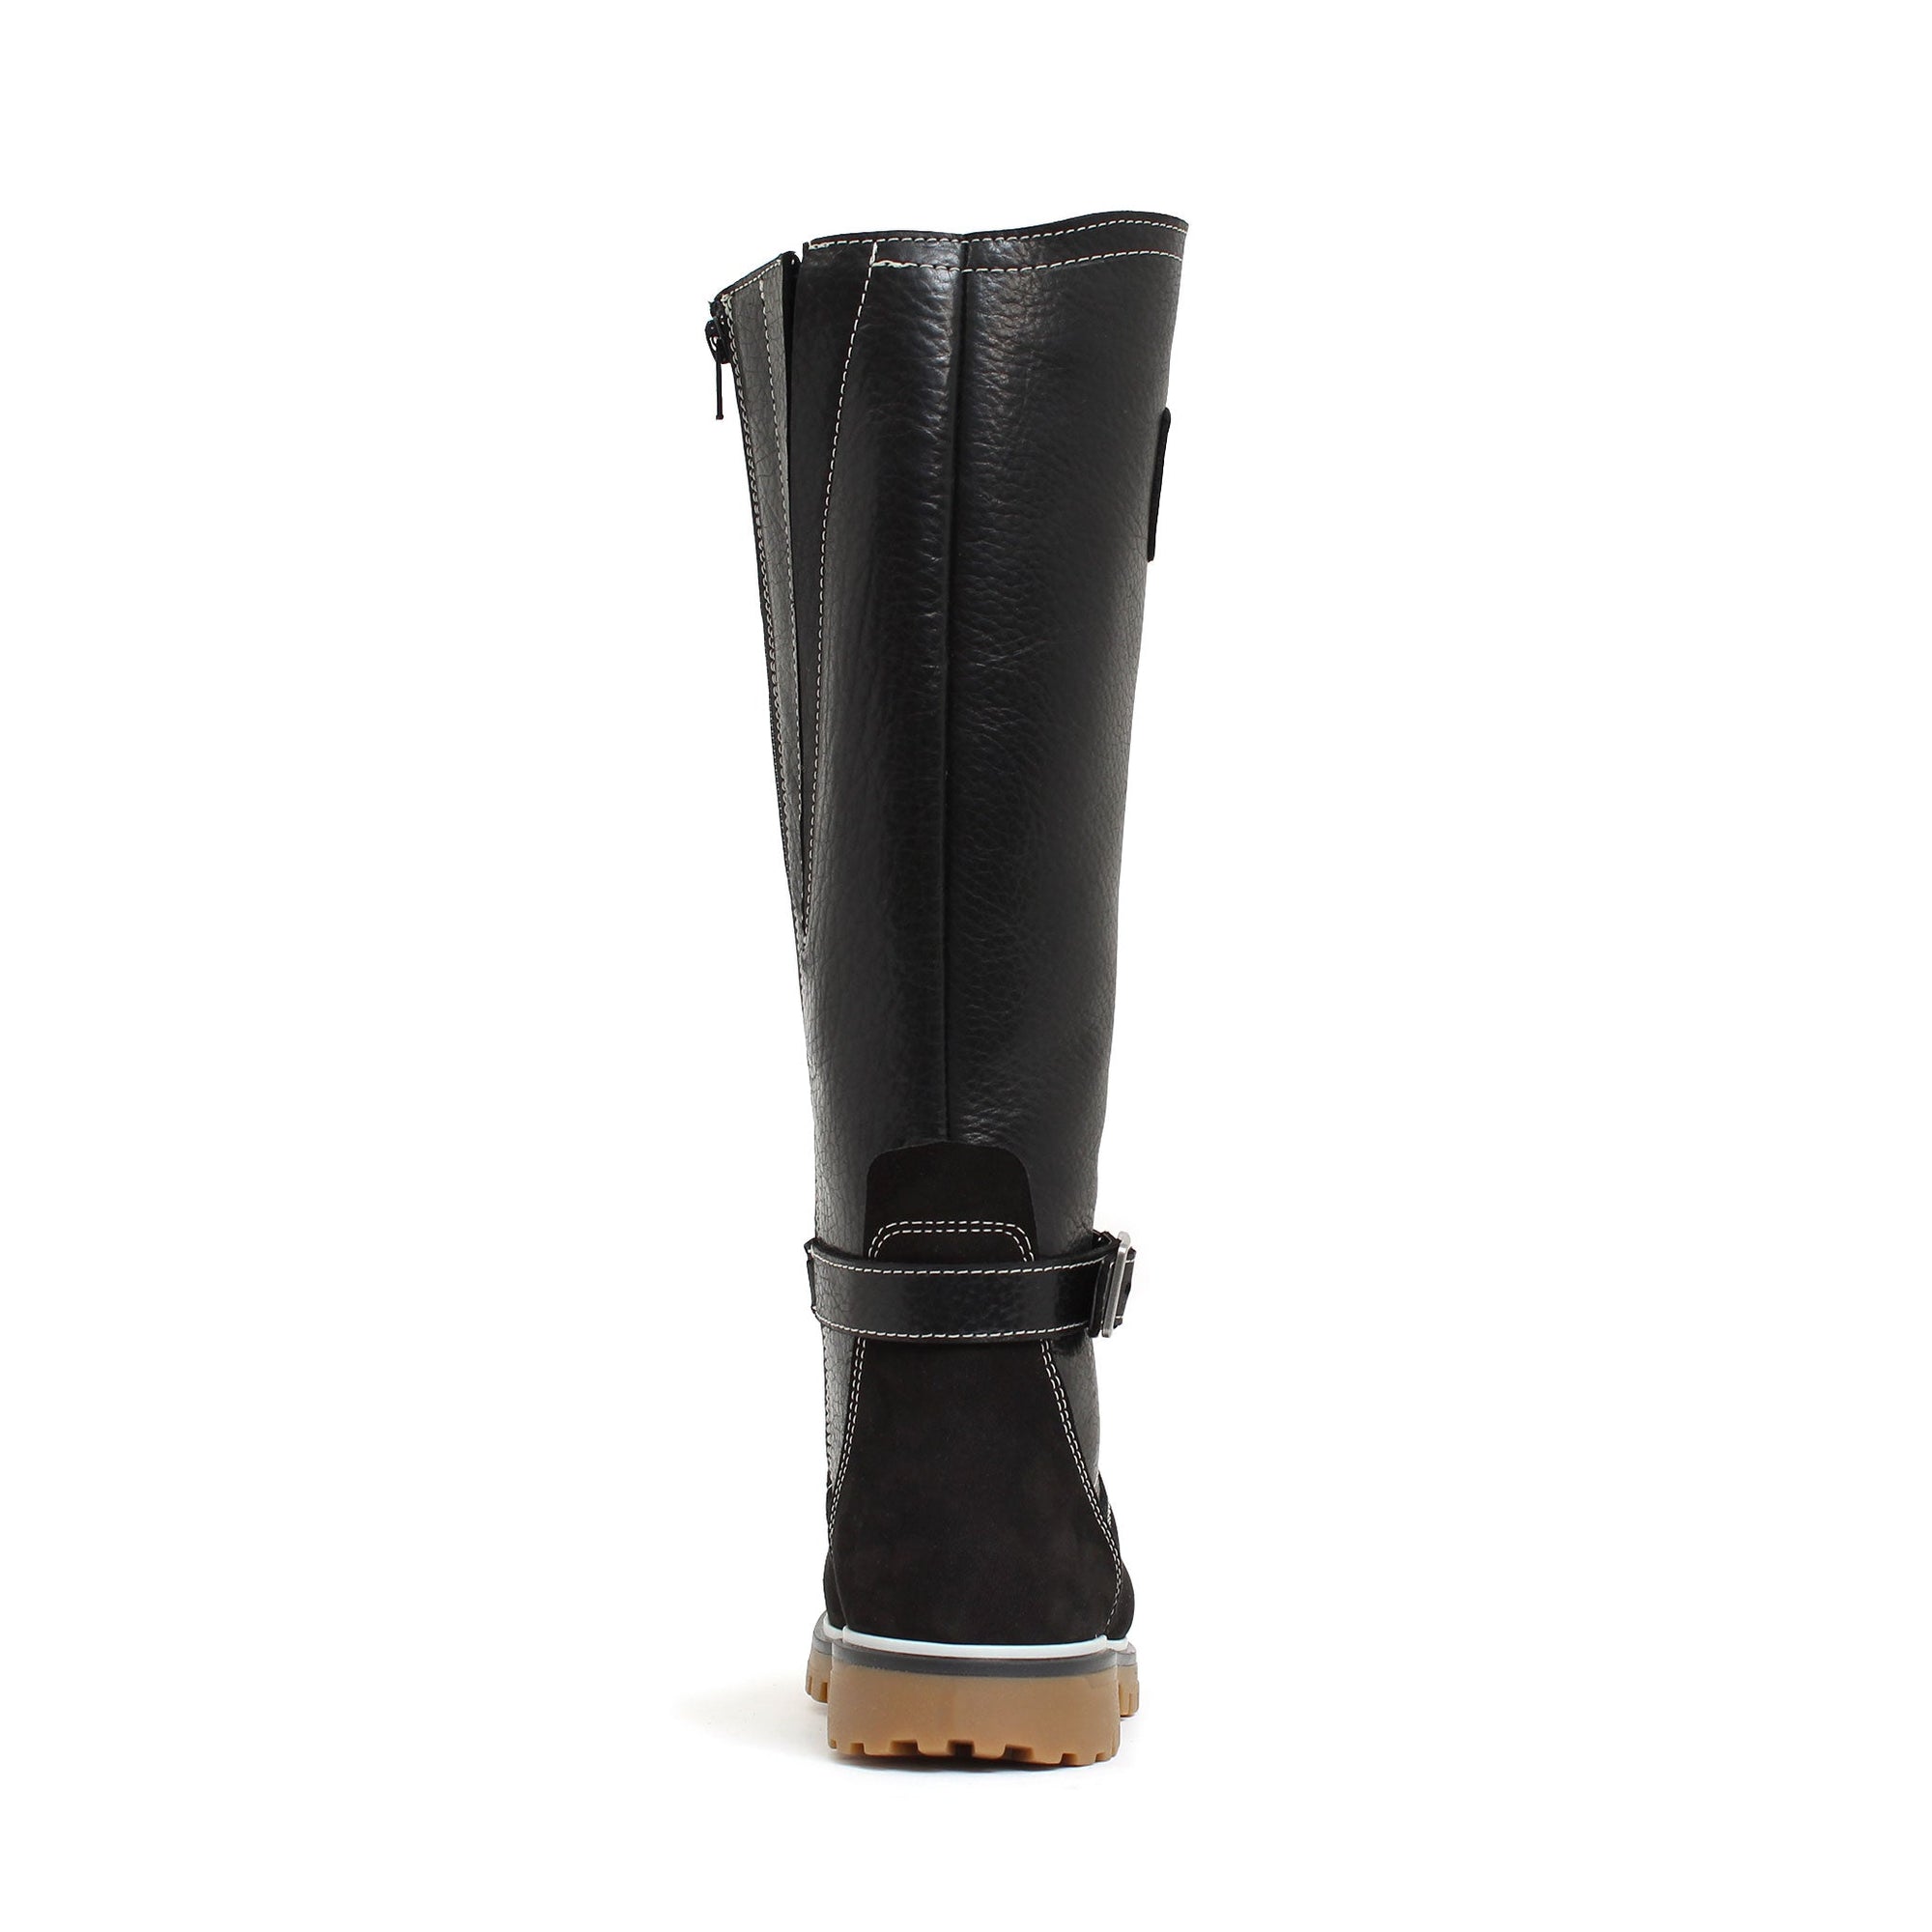 Perla winter boot for women - Brown 